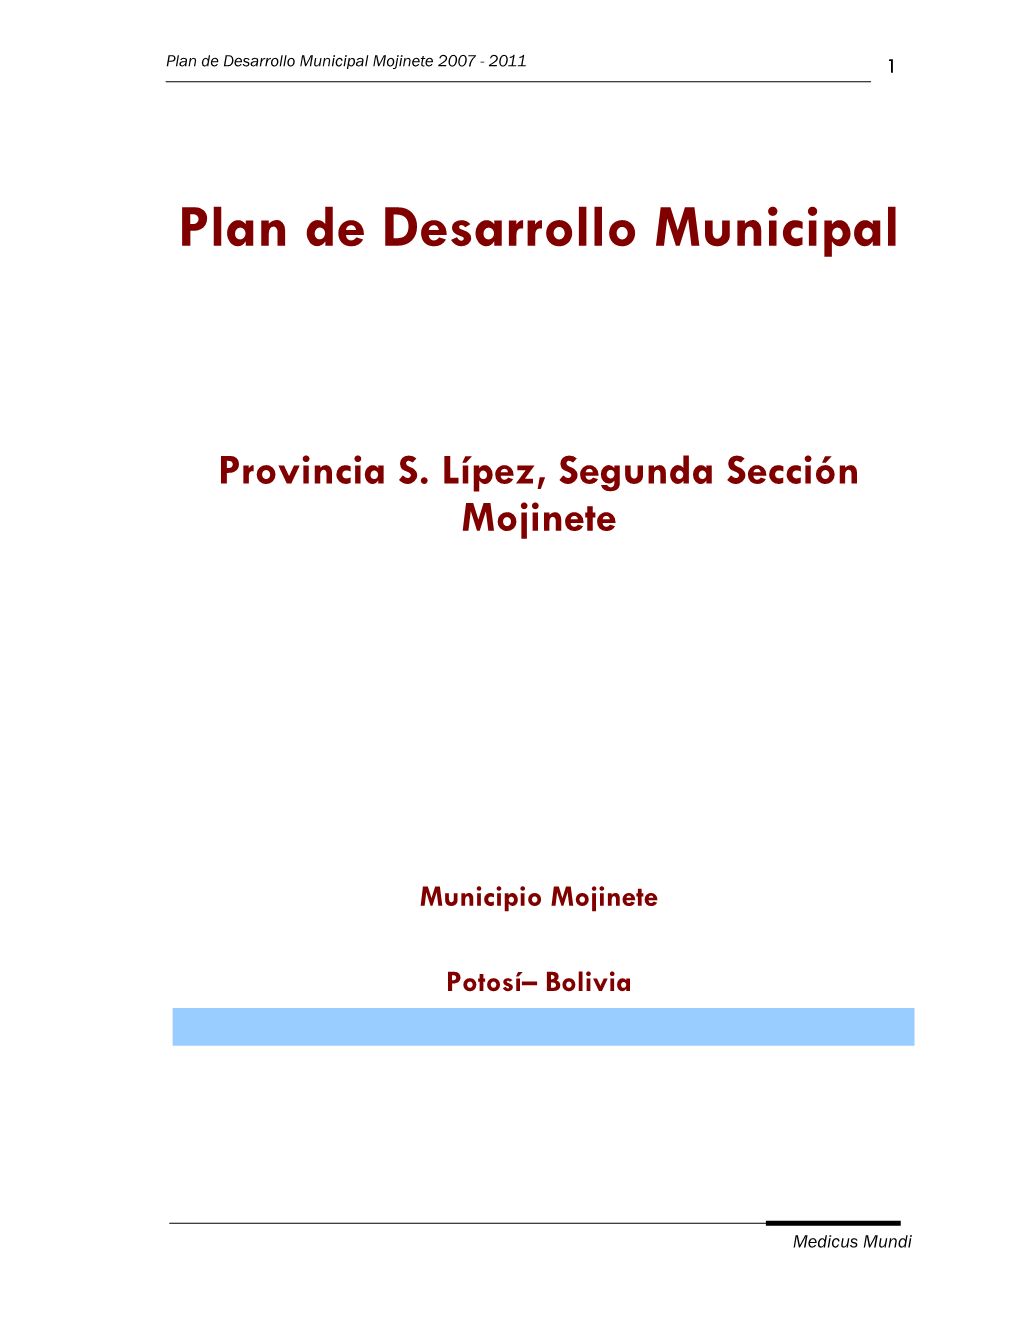 Plan De Desarrollo Municipal Mojinete 2007 - 2011 1